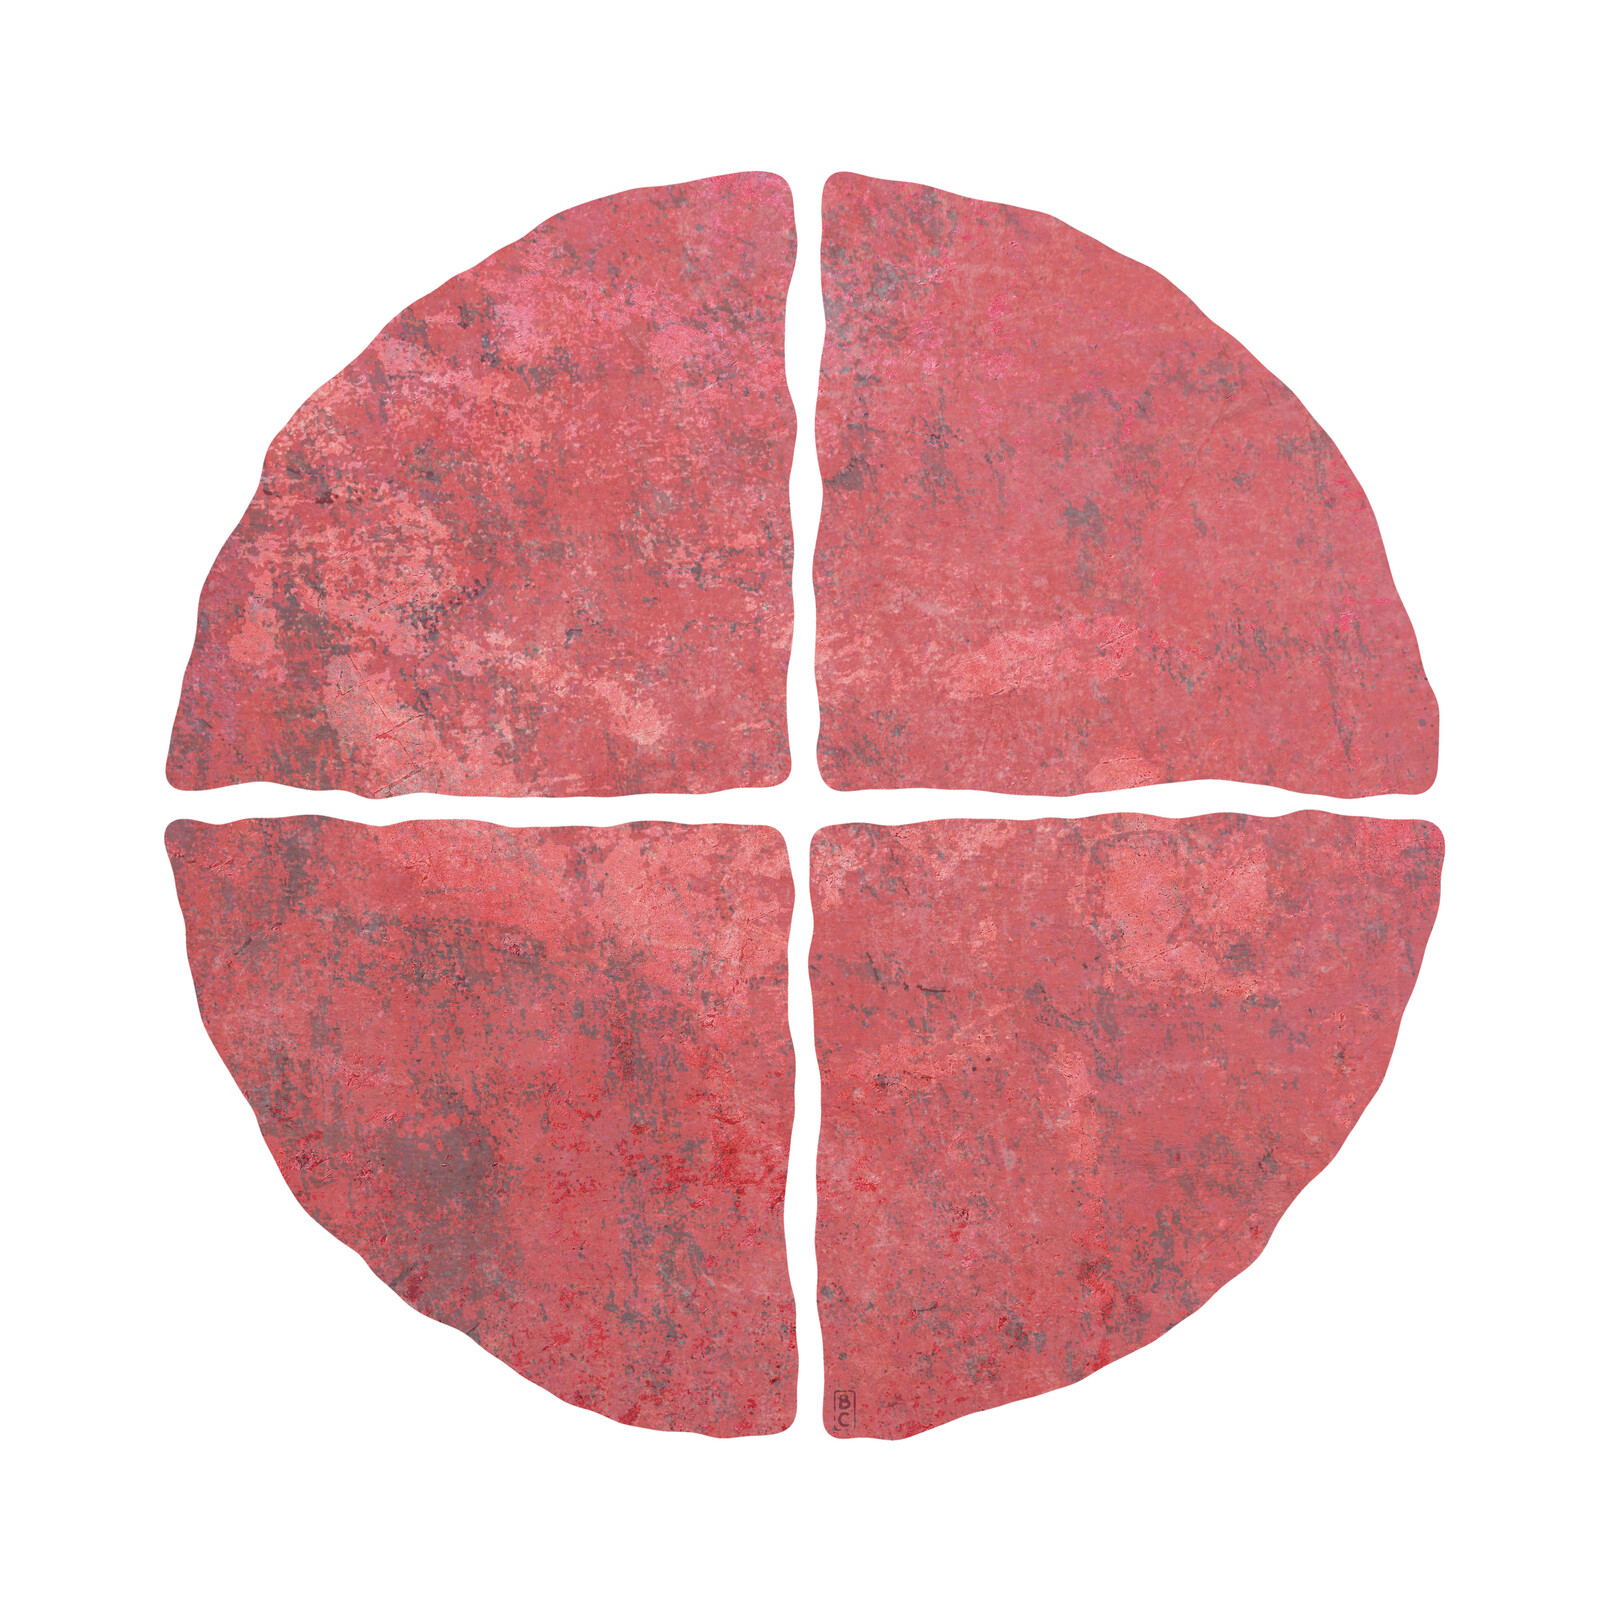 A reddish pink circle cut into four quarters.